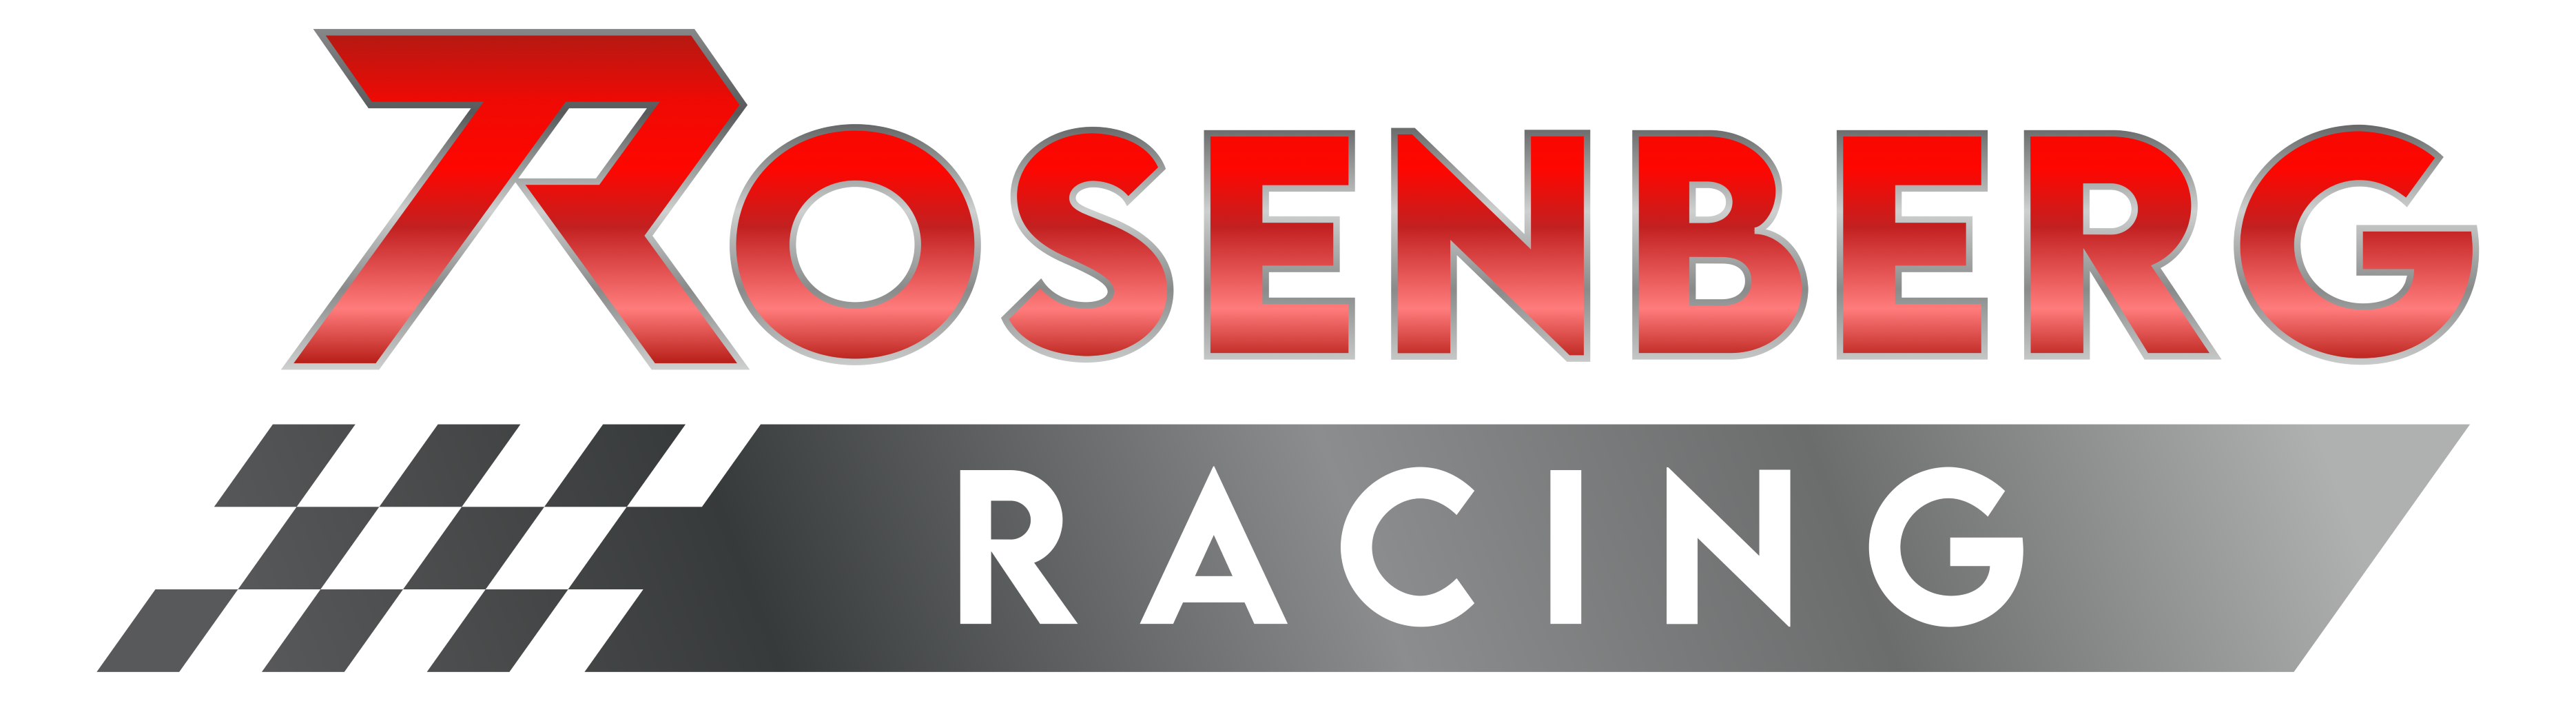 Rosenberg Racing